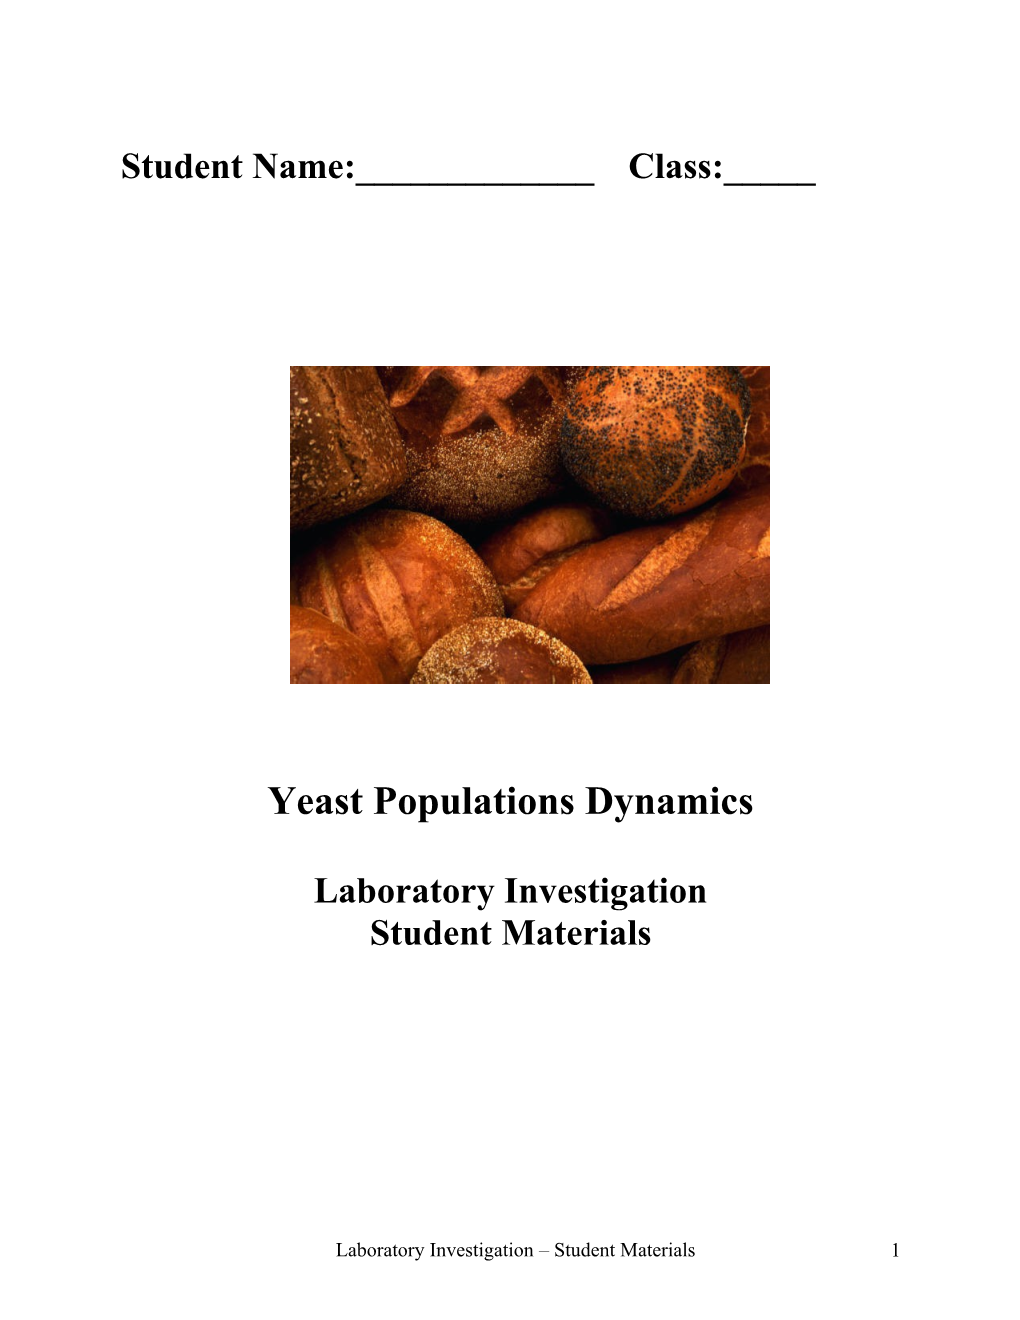 Strand 5 Yeast Population Dynamics Lab Student